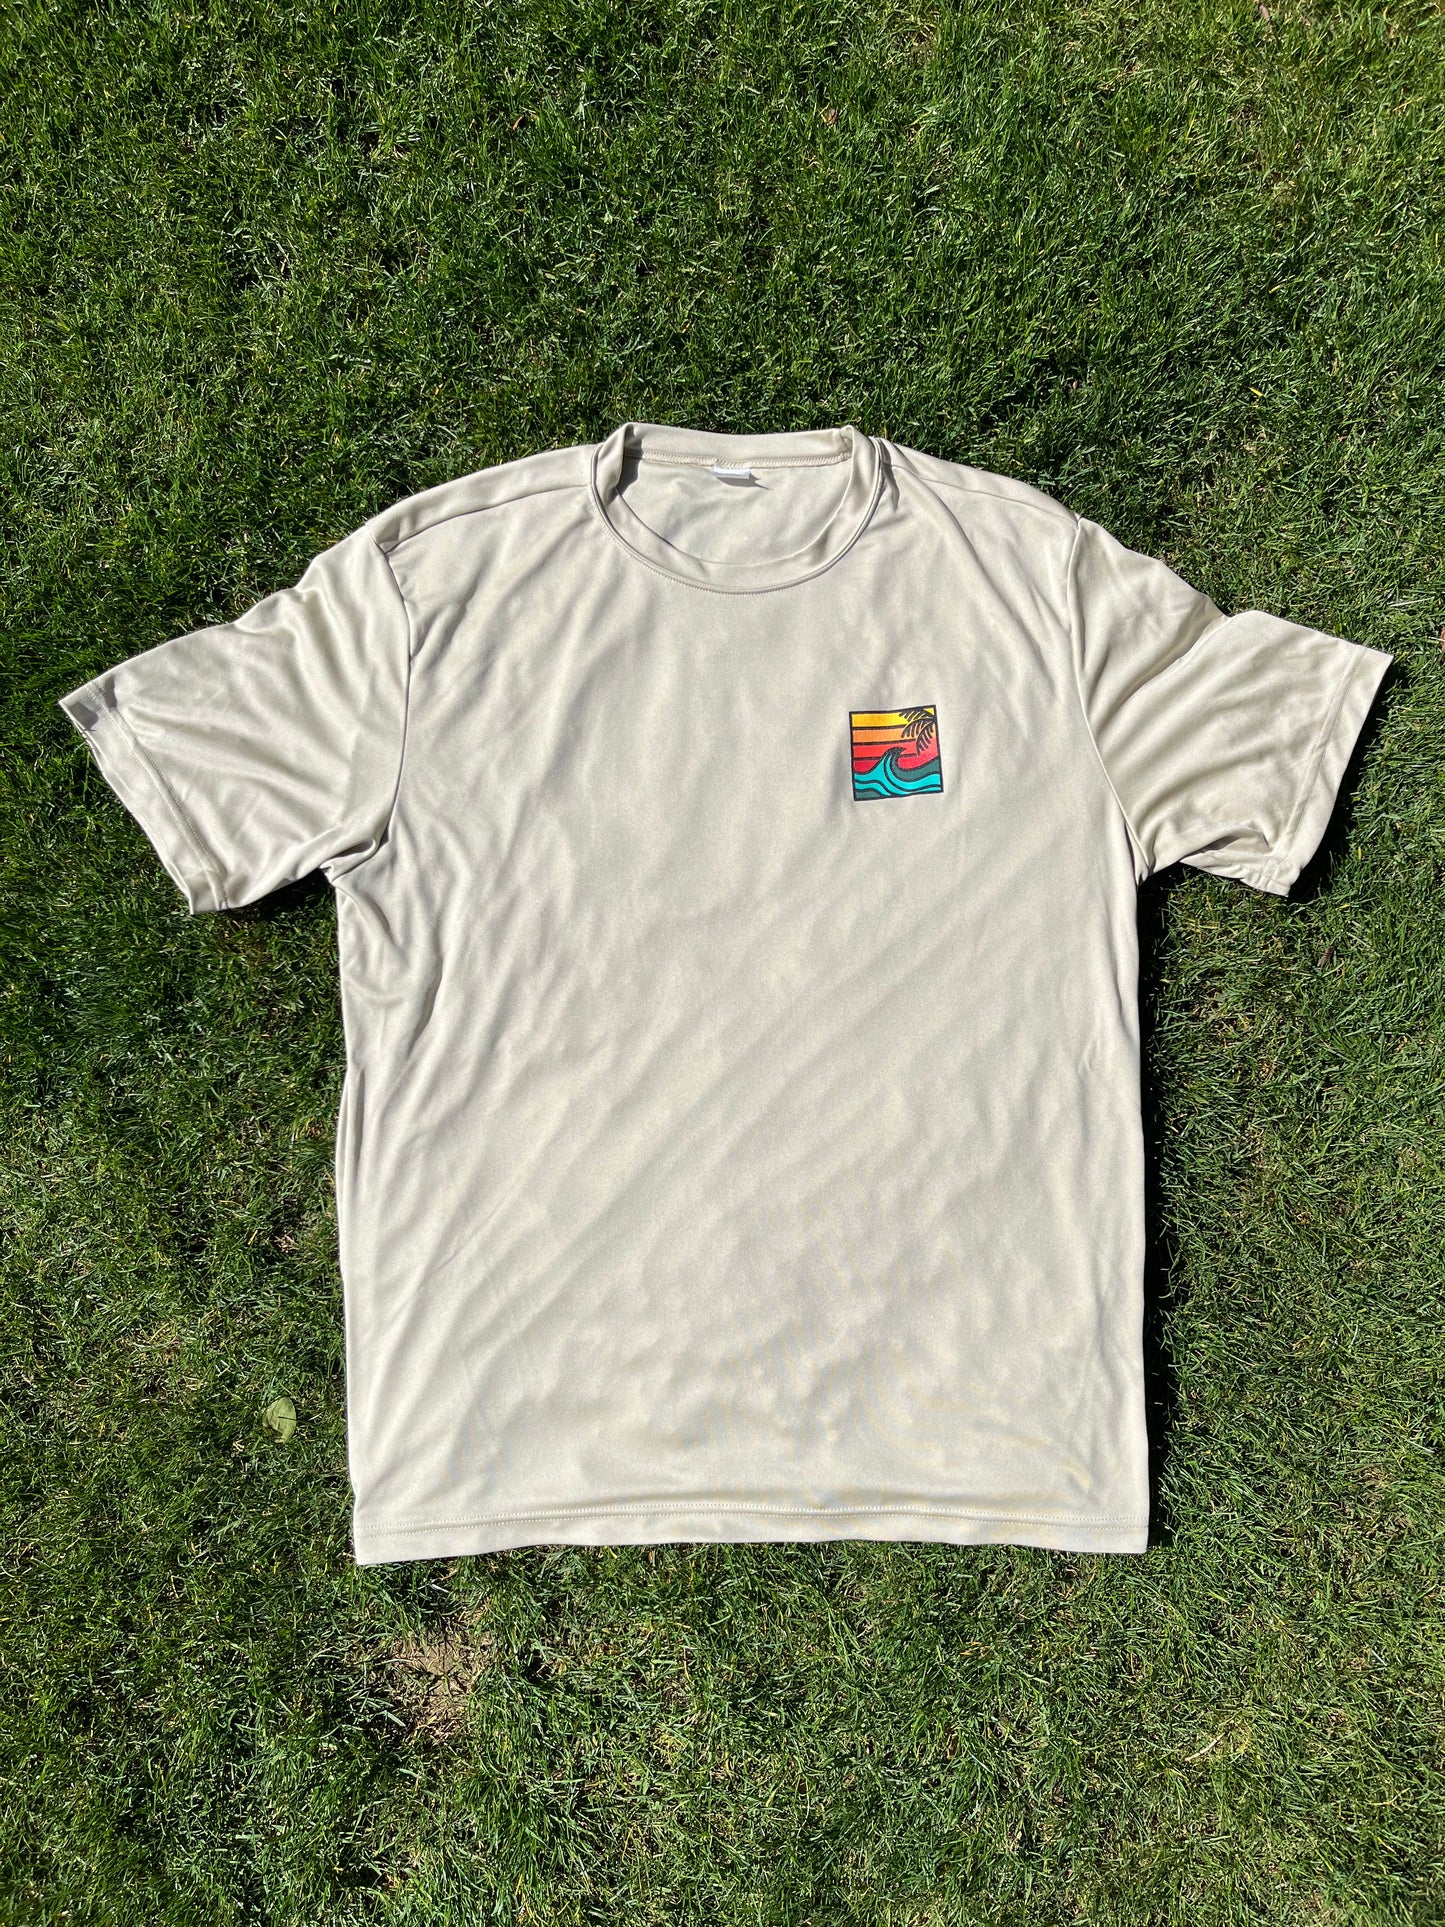 Cove Settler - Sunset T-Shirt